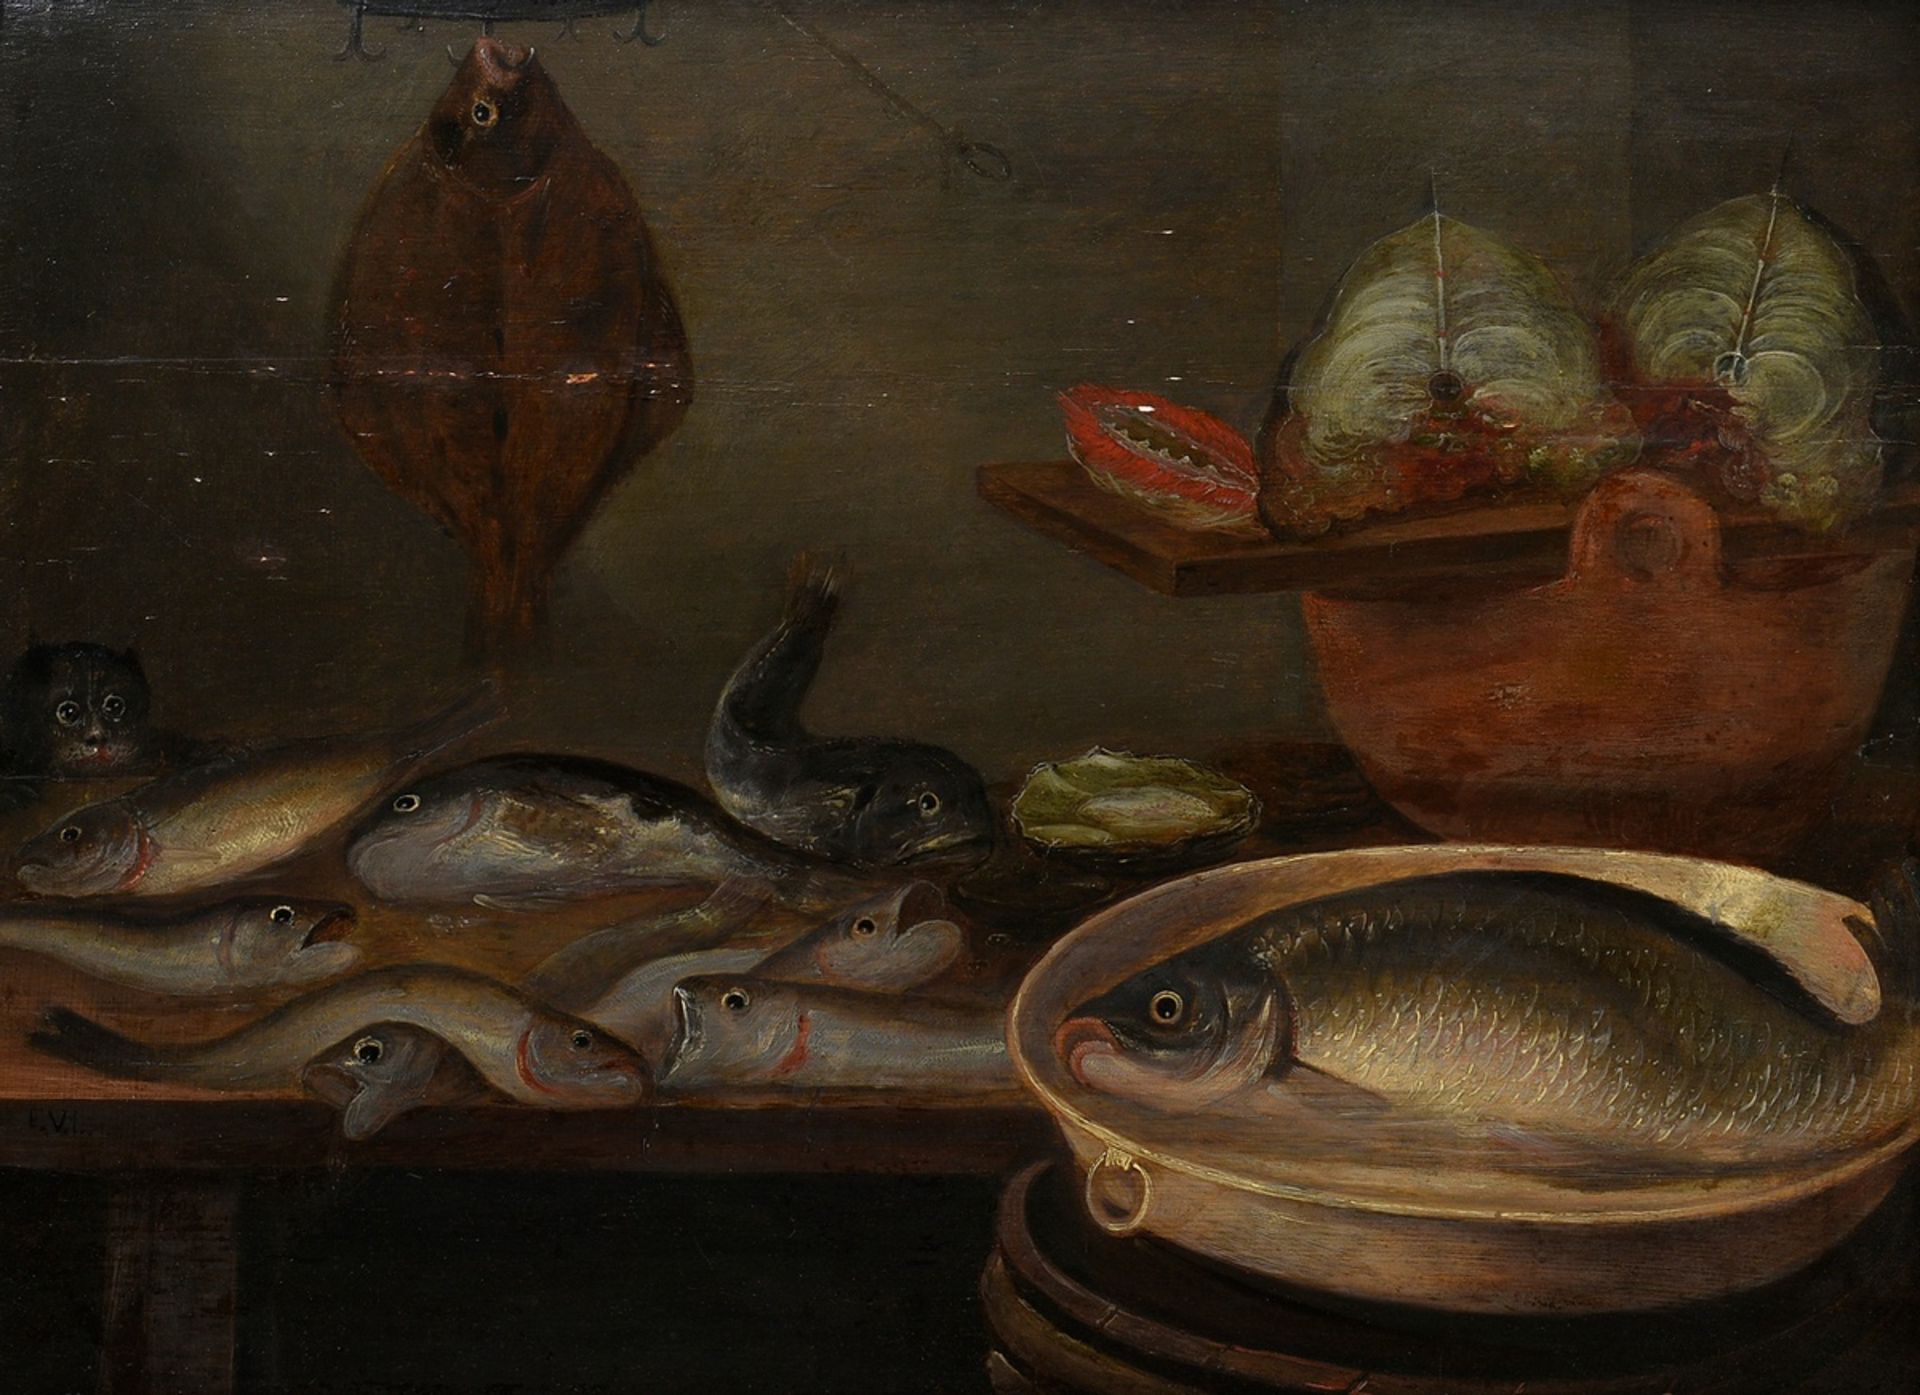 Monogramist F.V.L. (17th c.) "Fish Still Life with Cat", oil/wood, in the manner of Pieter van Bouc